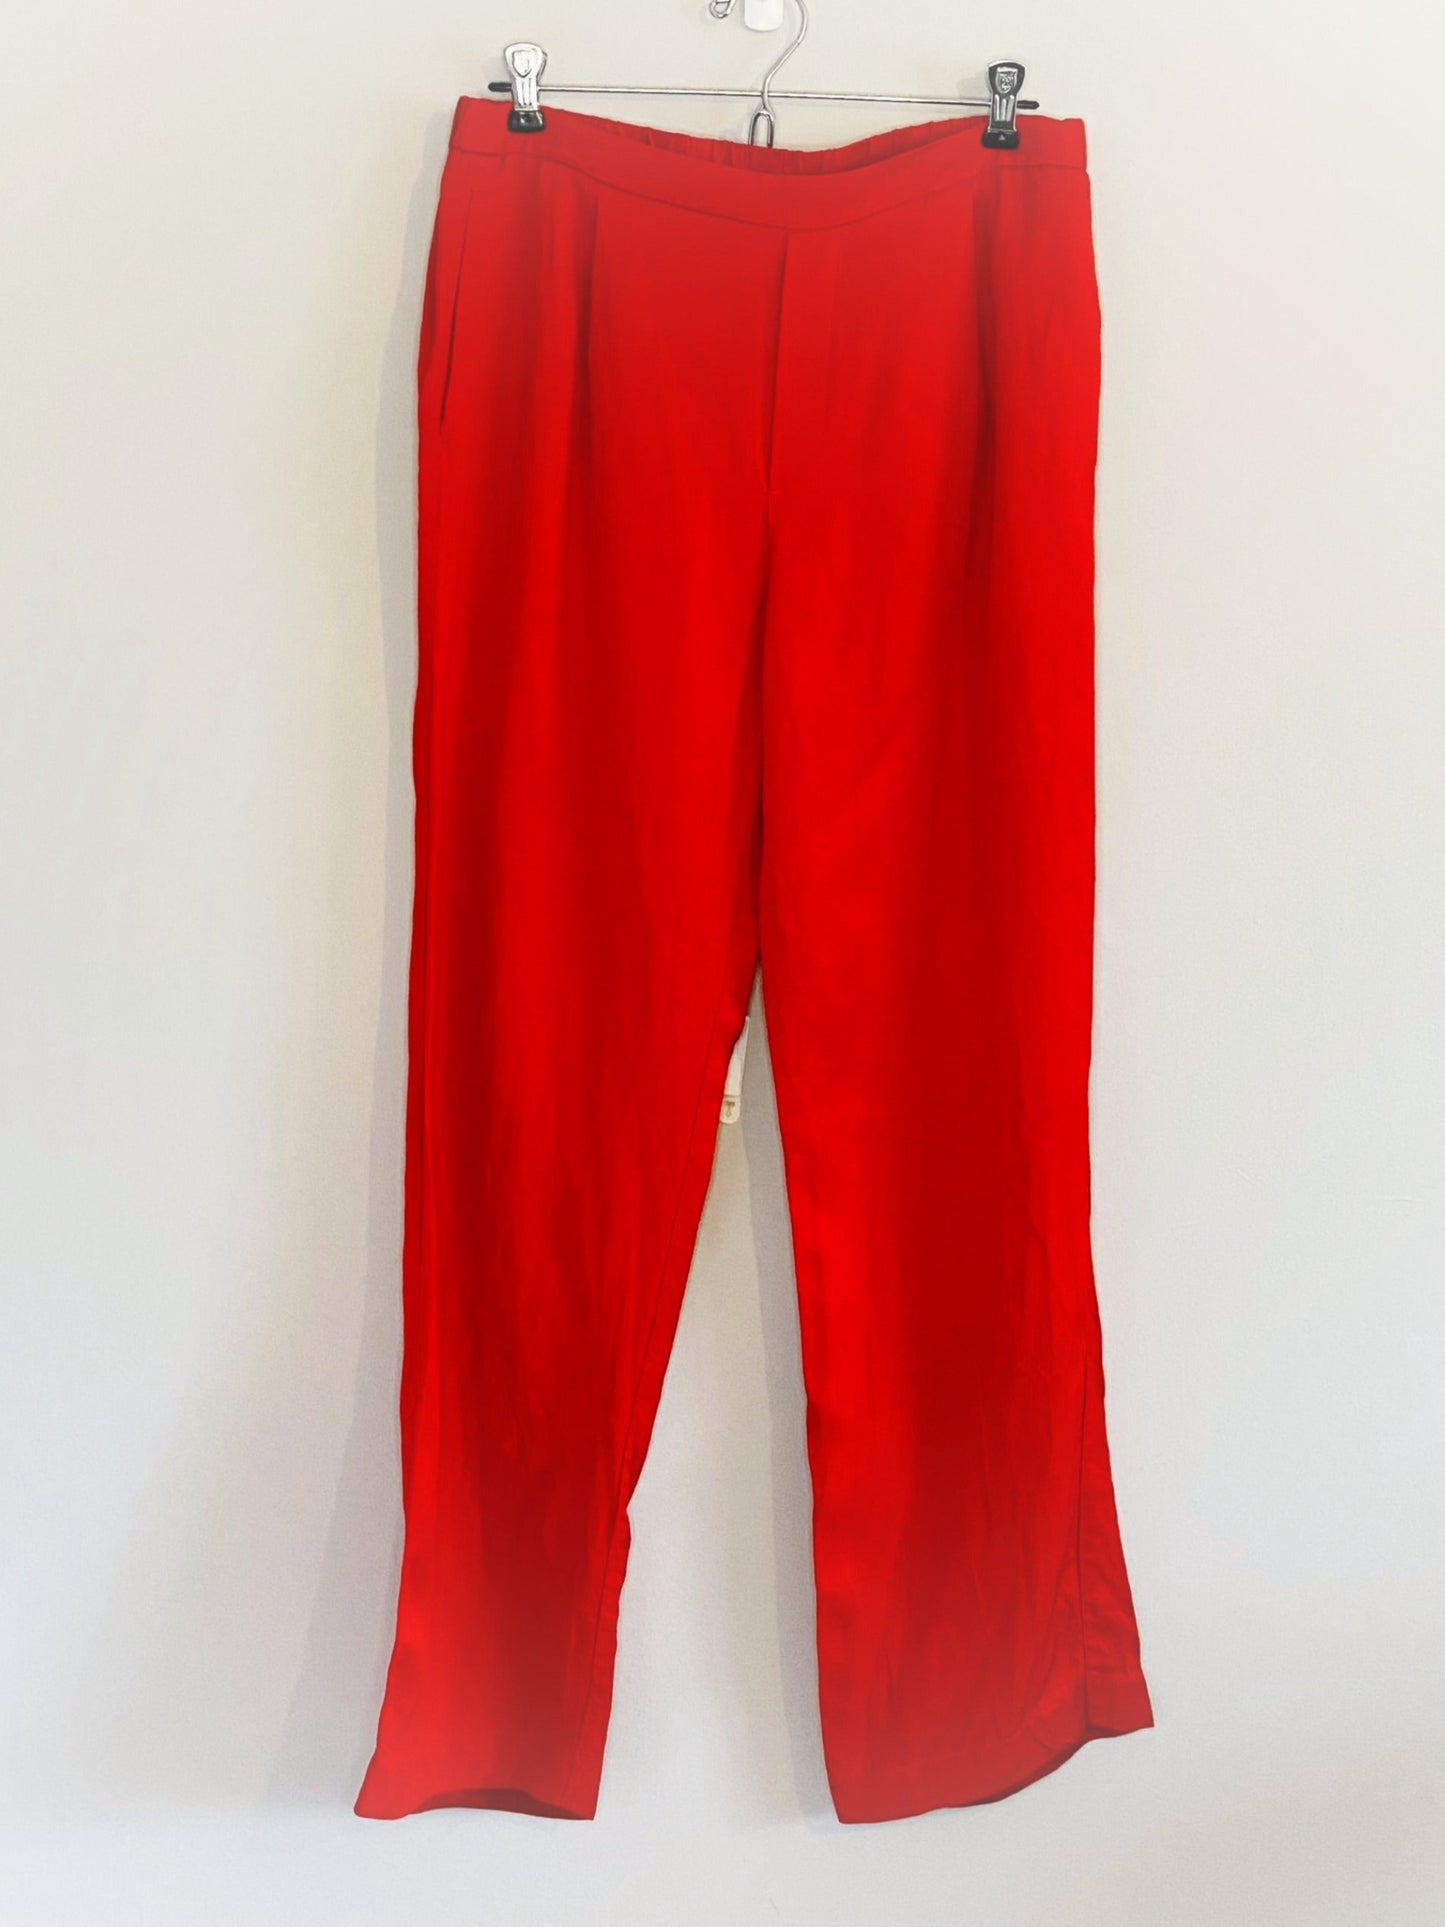 Pantalon Rouge (Taille 10)